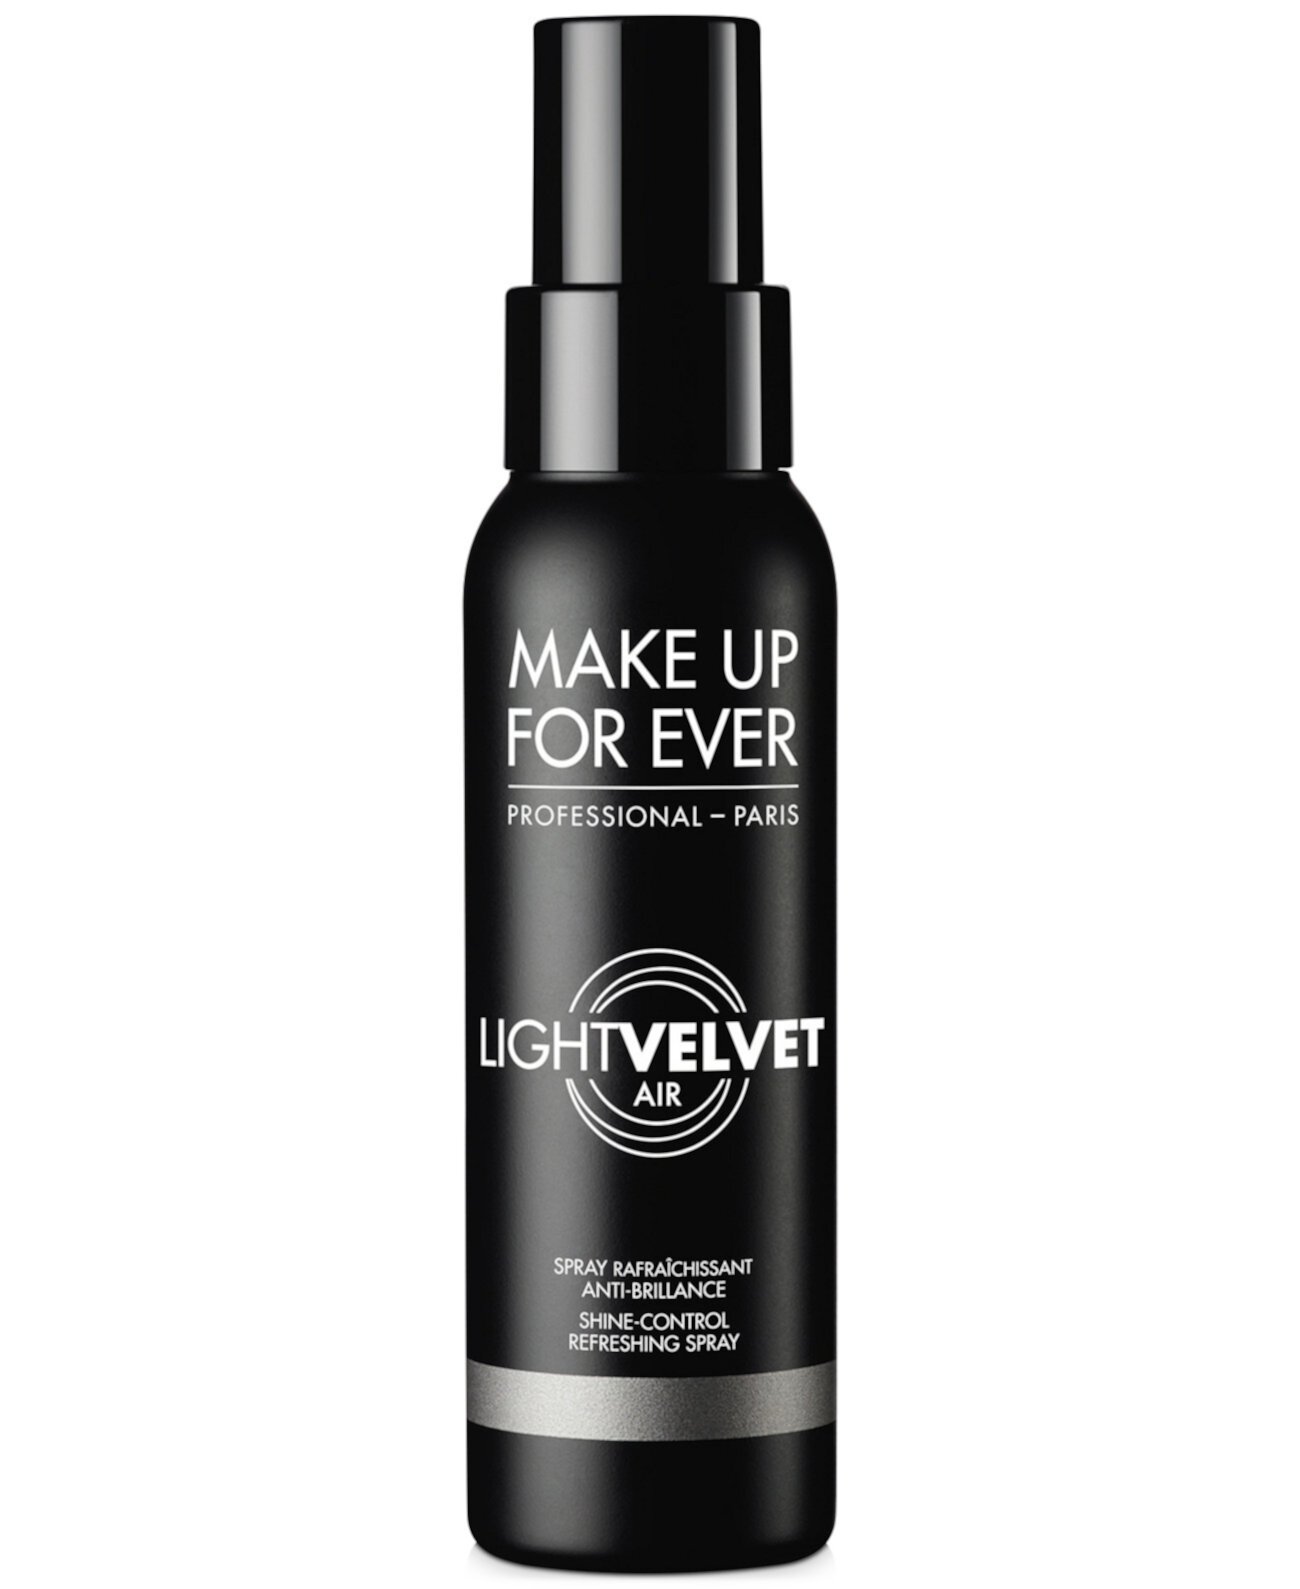 Освежающий спрей Light Velvet Air Shine-Control, 3,38 унции. Make Up For Ever